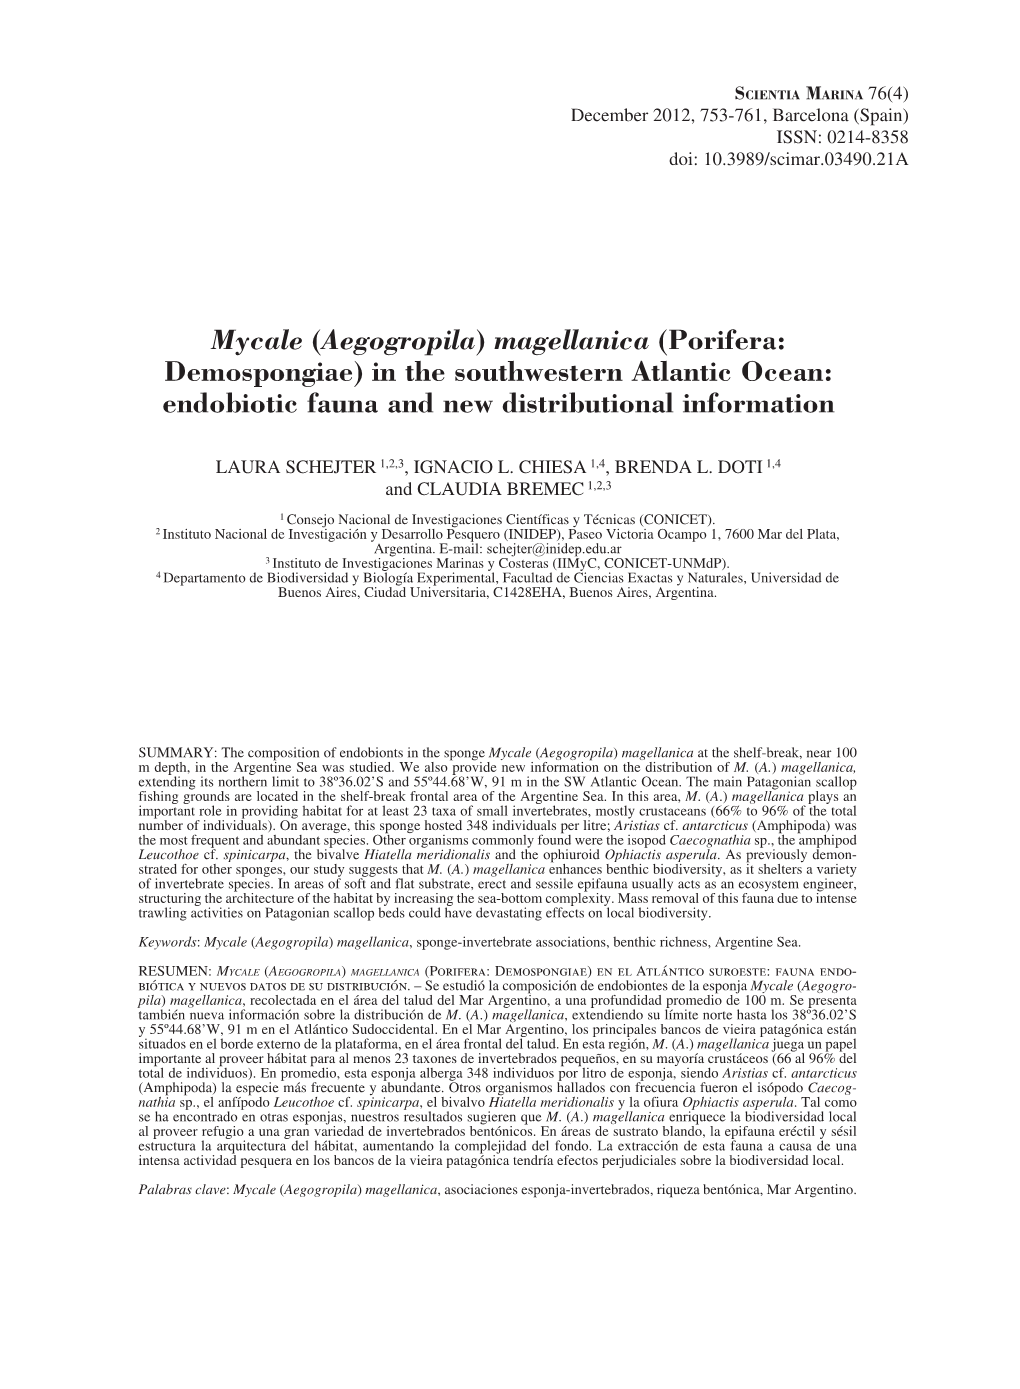 Mycale (Aegogropila) Magellanica (Porifera: Demospongiae) in the Southwestern Atlantic Ocean: Endobiotic Fauna and New Distributional Information